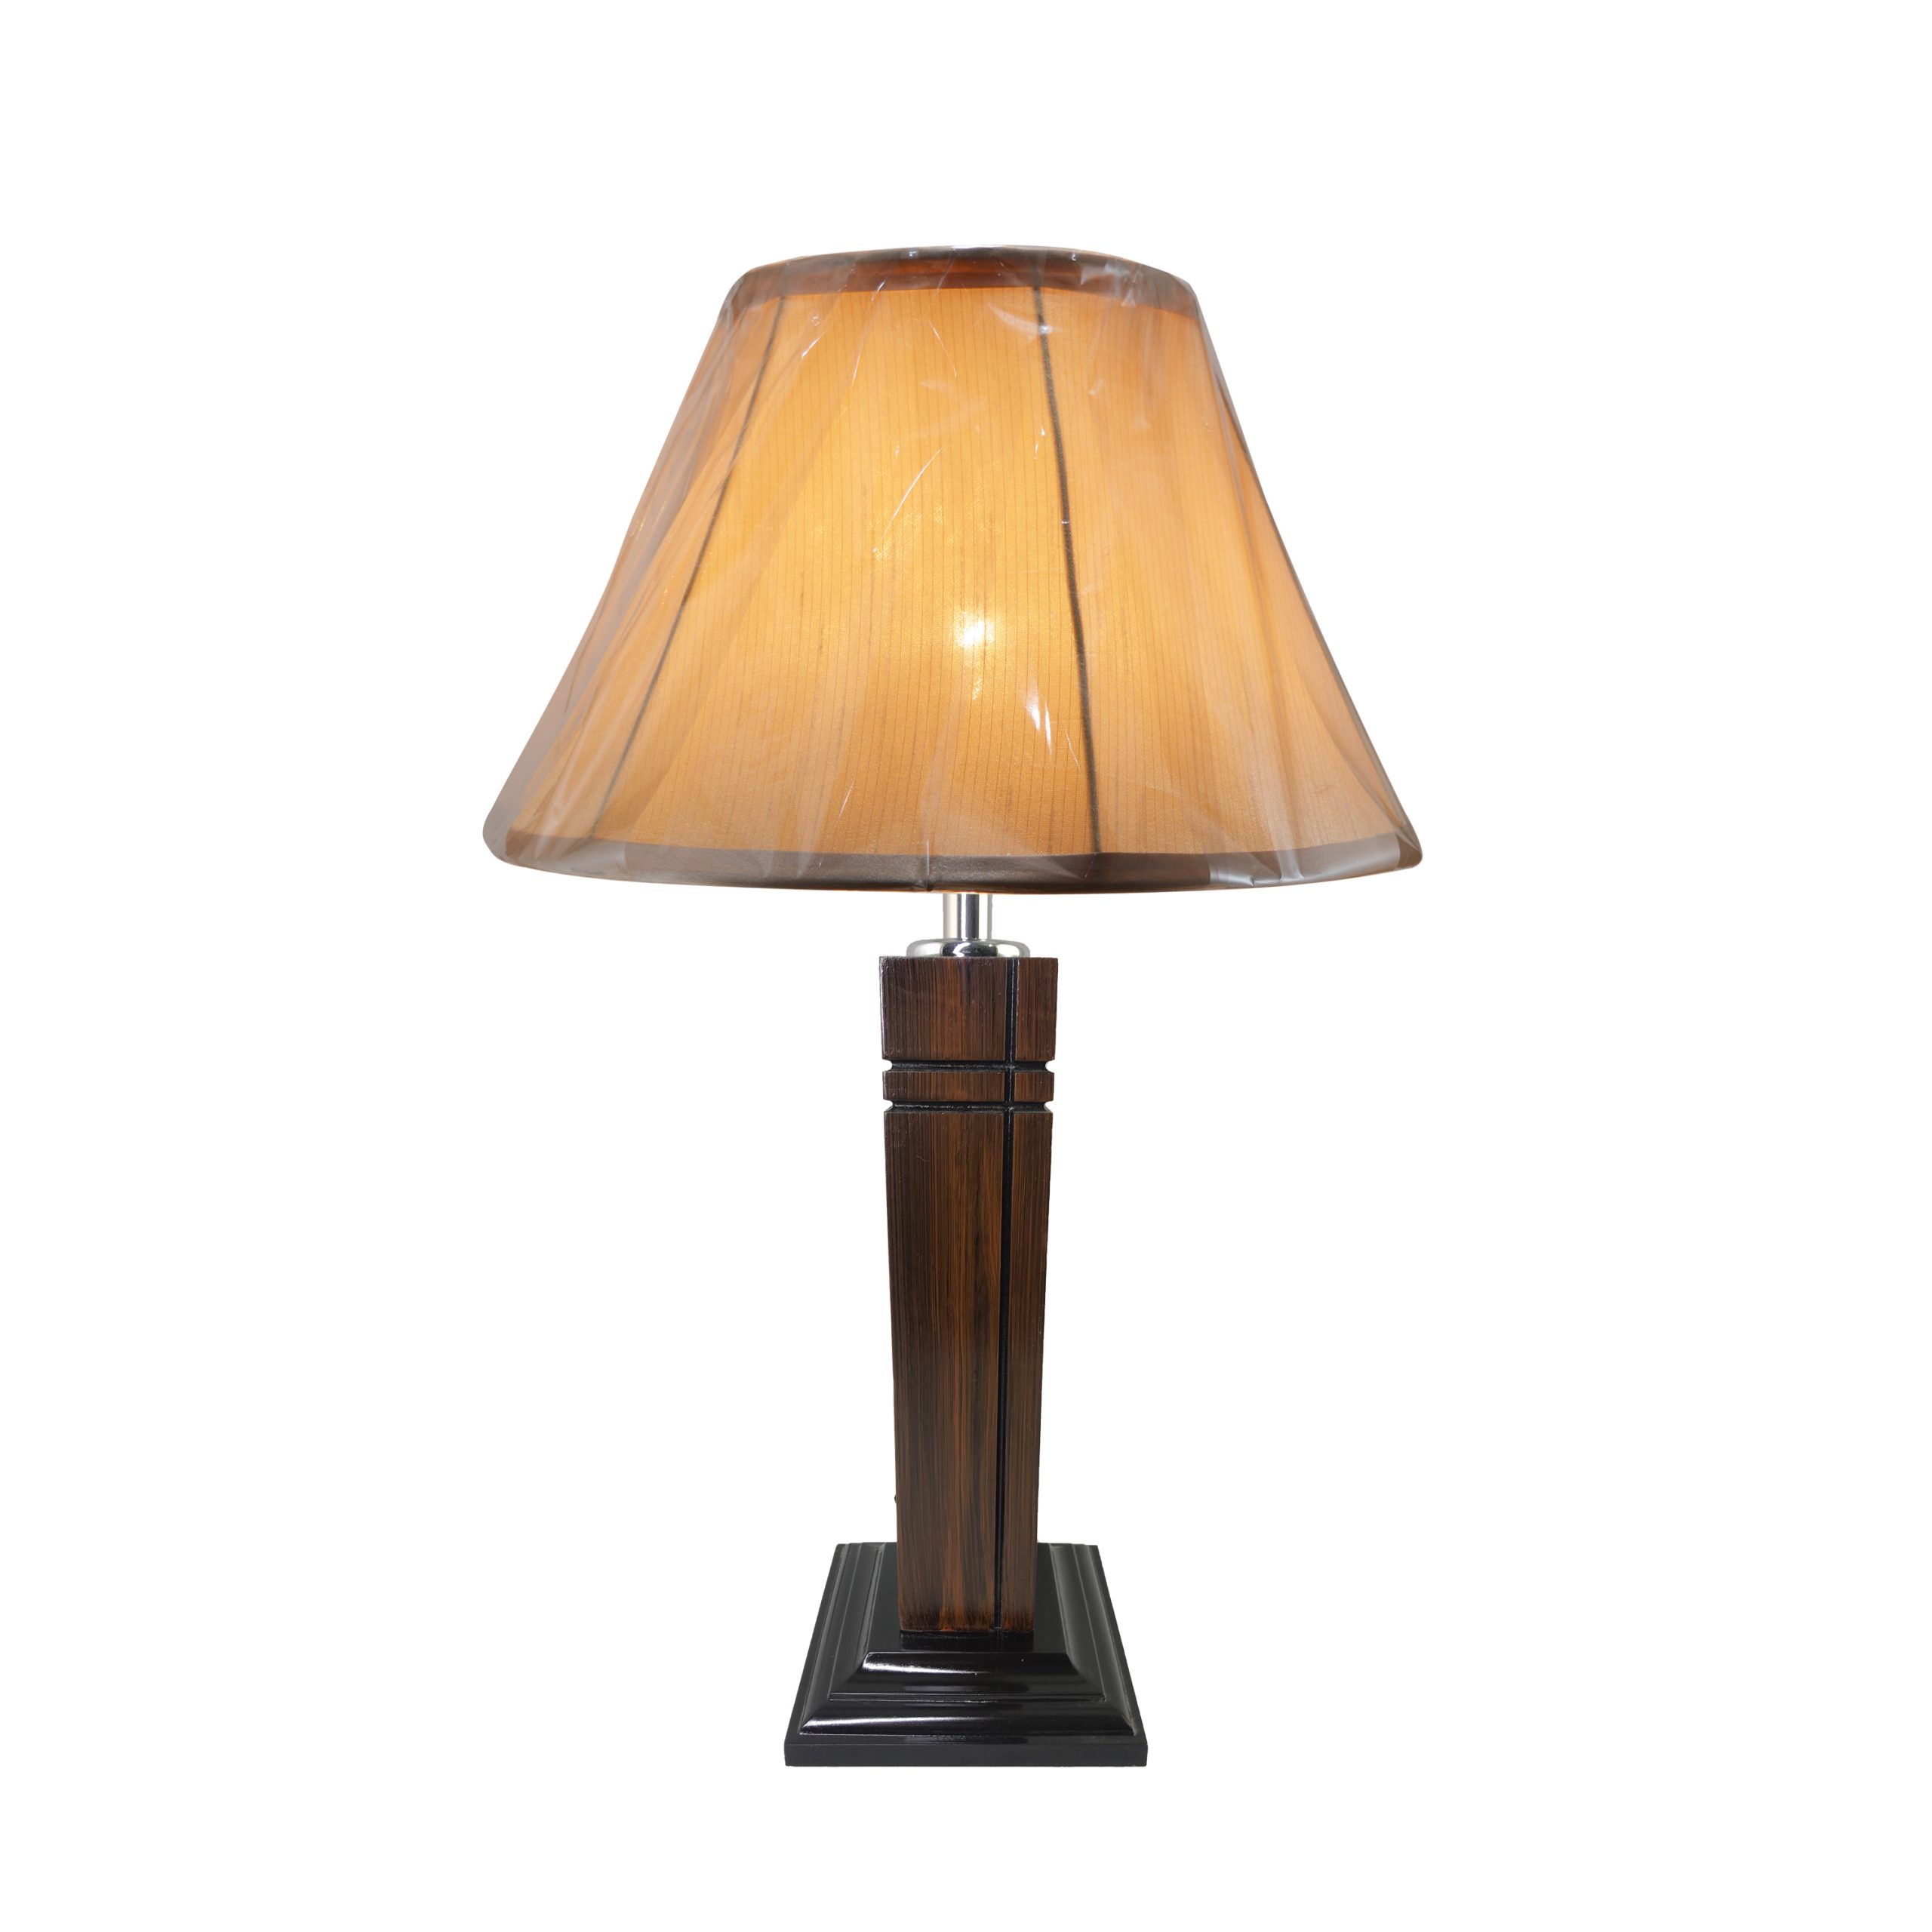 Lamp-6-5-scaled-1.jpg